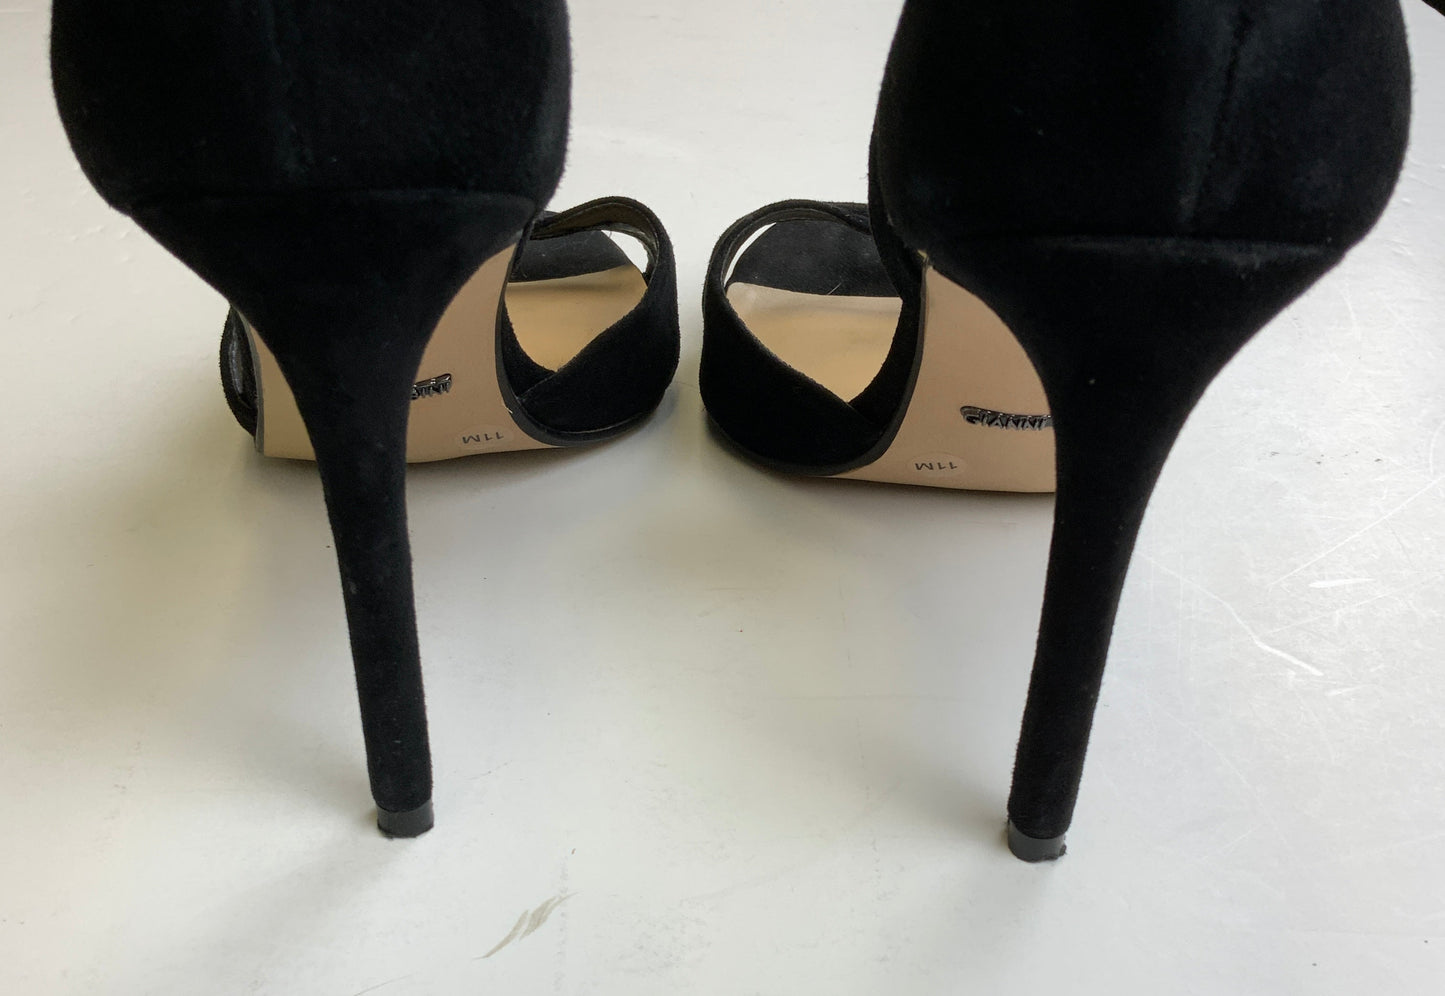 Shoes Heels Stiletto By Gianni Bini  Size: 11